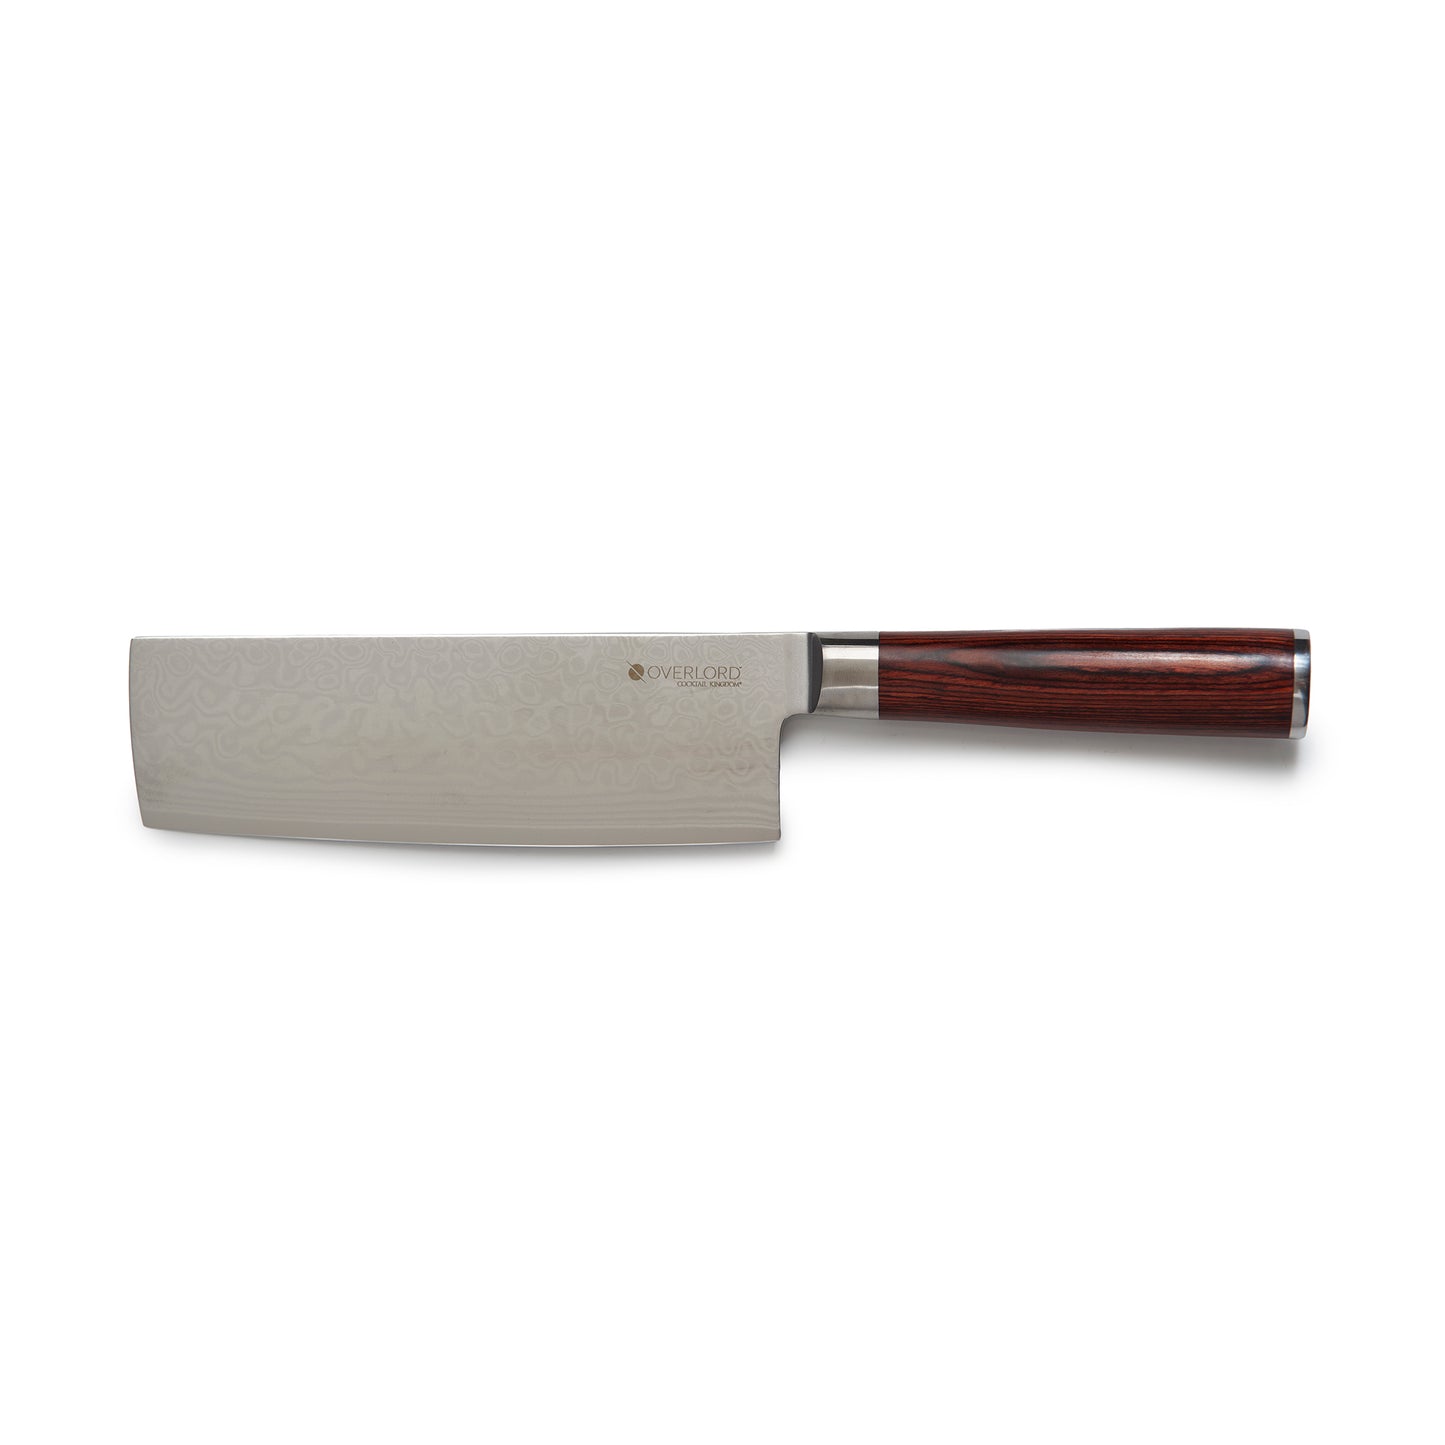 OVERLORD™ 6.8” NAKIRI KNIFE – PAKKAWOOD HANDLE